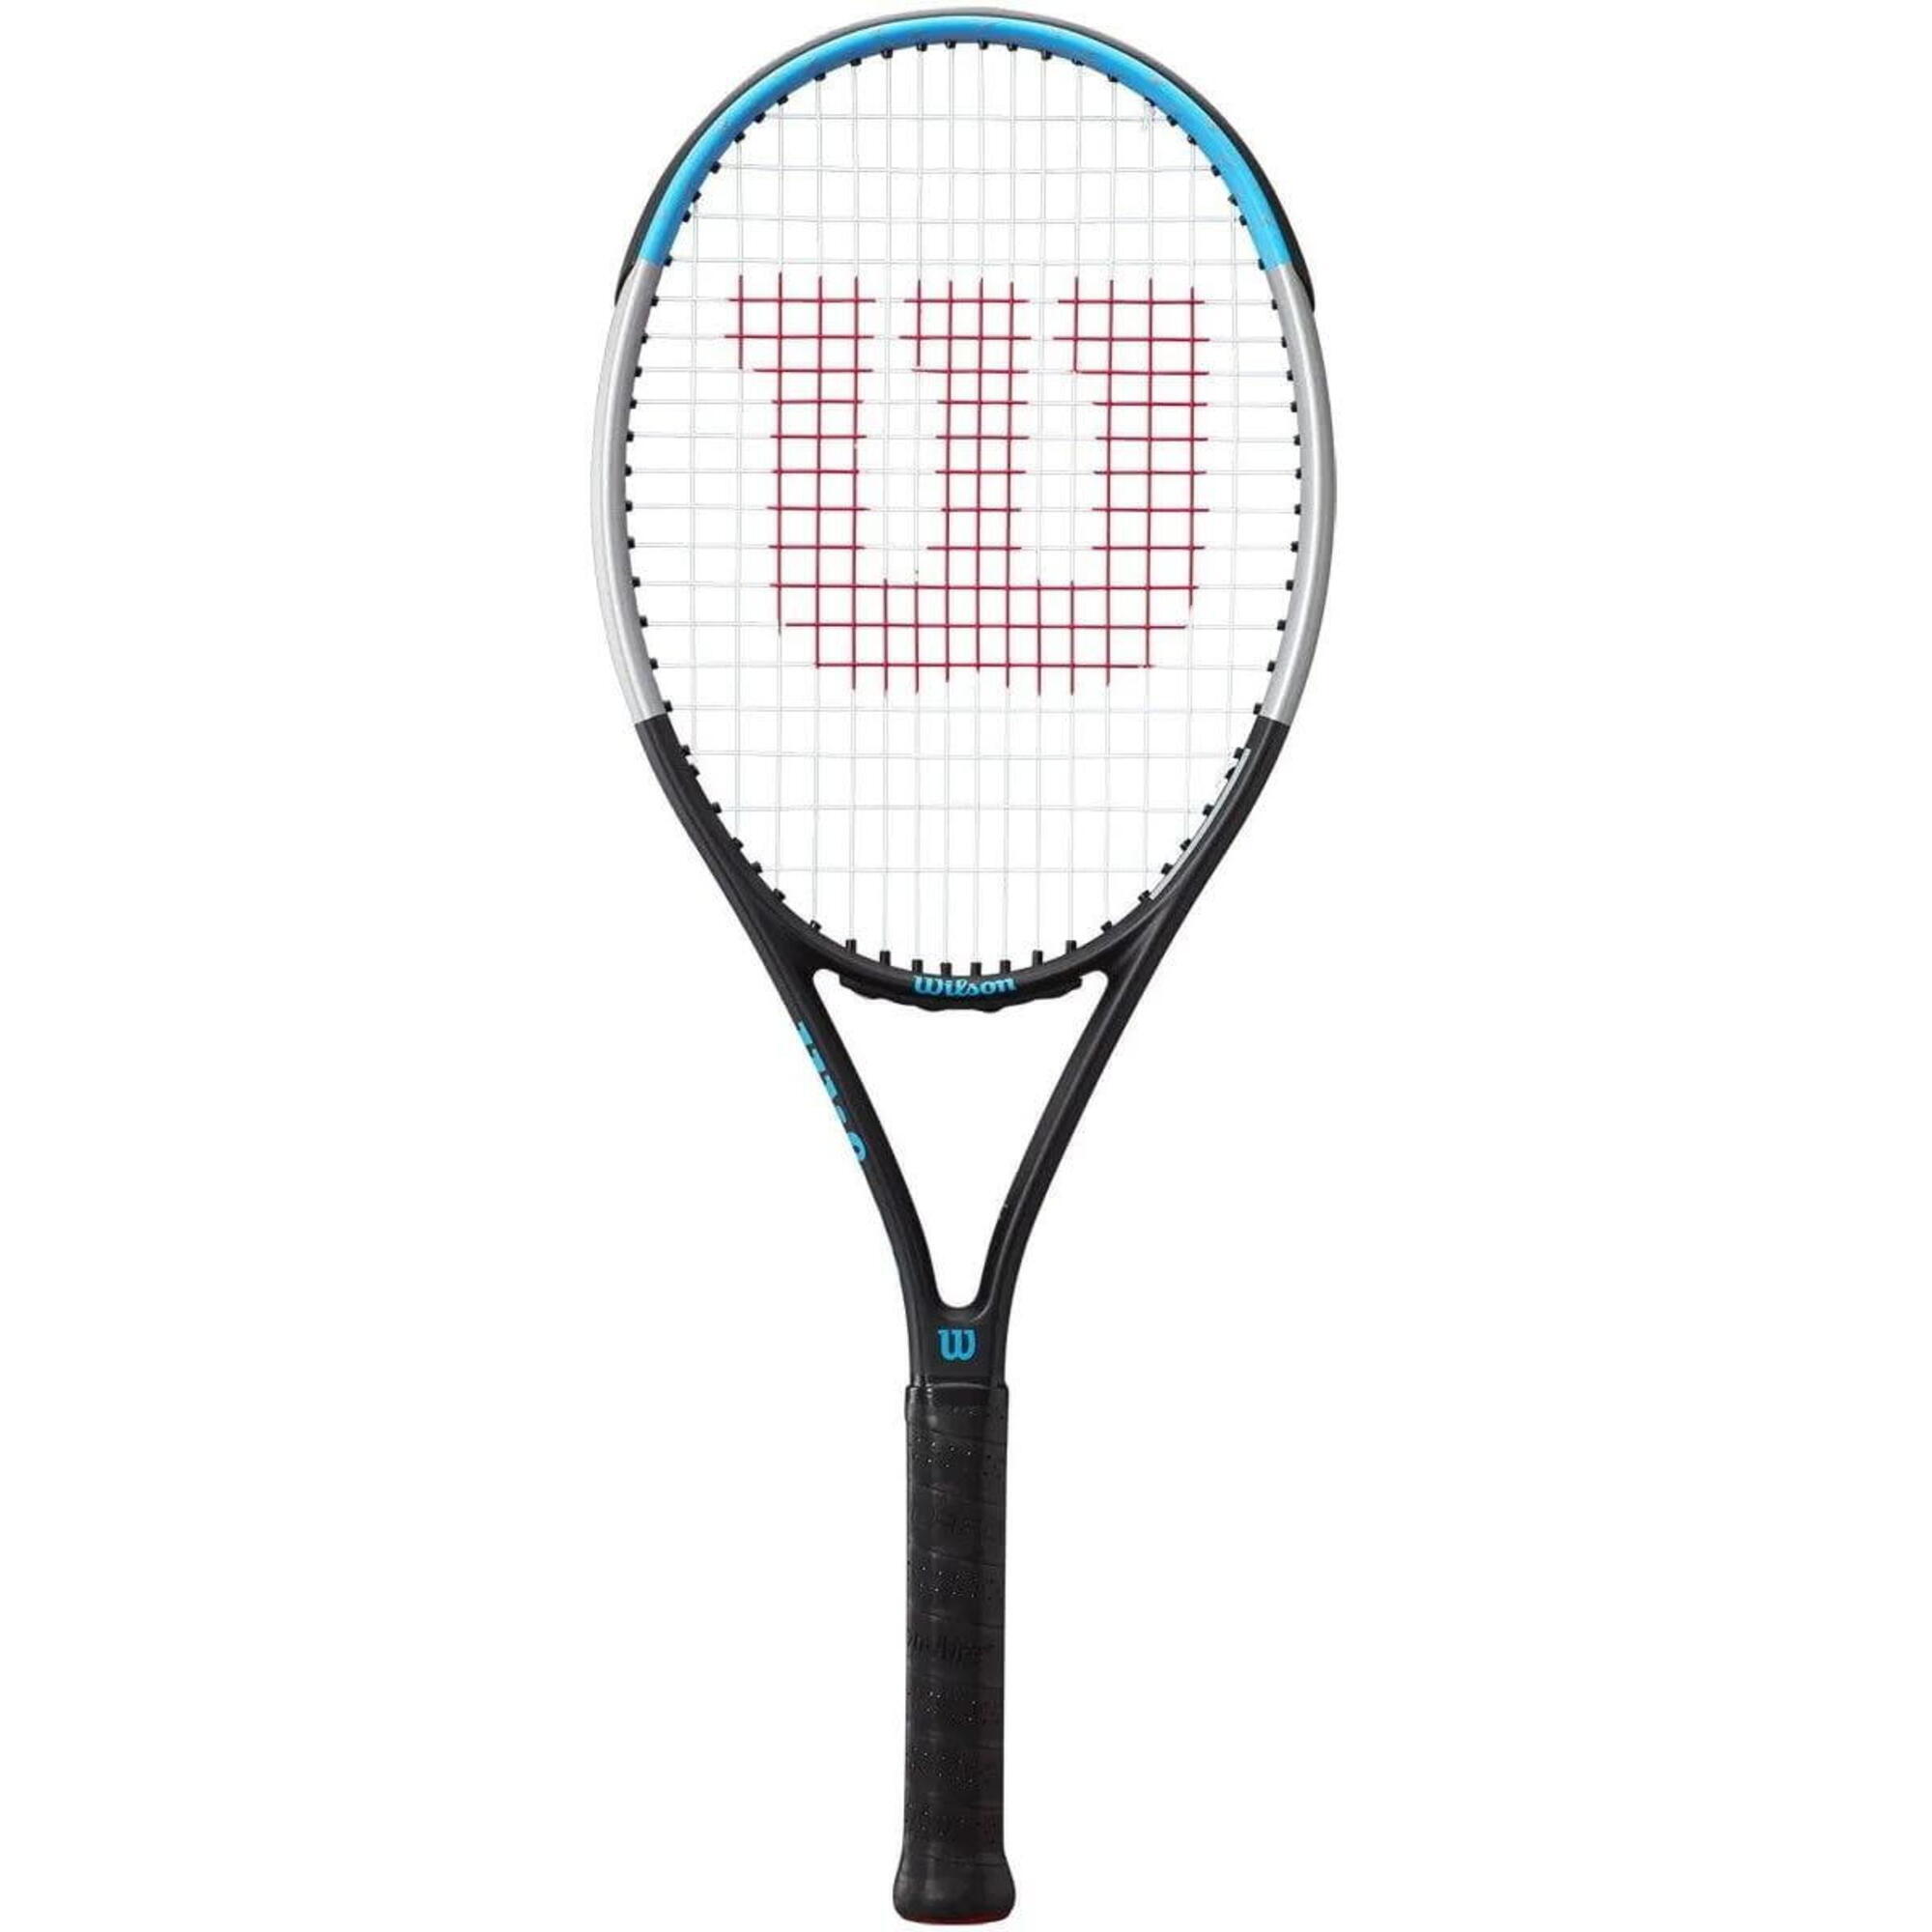 WILSON Wilson Ultra Power 100 Graphite Tennis Racket